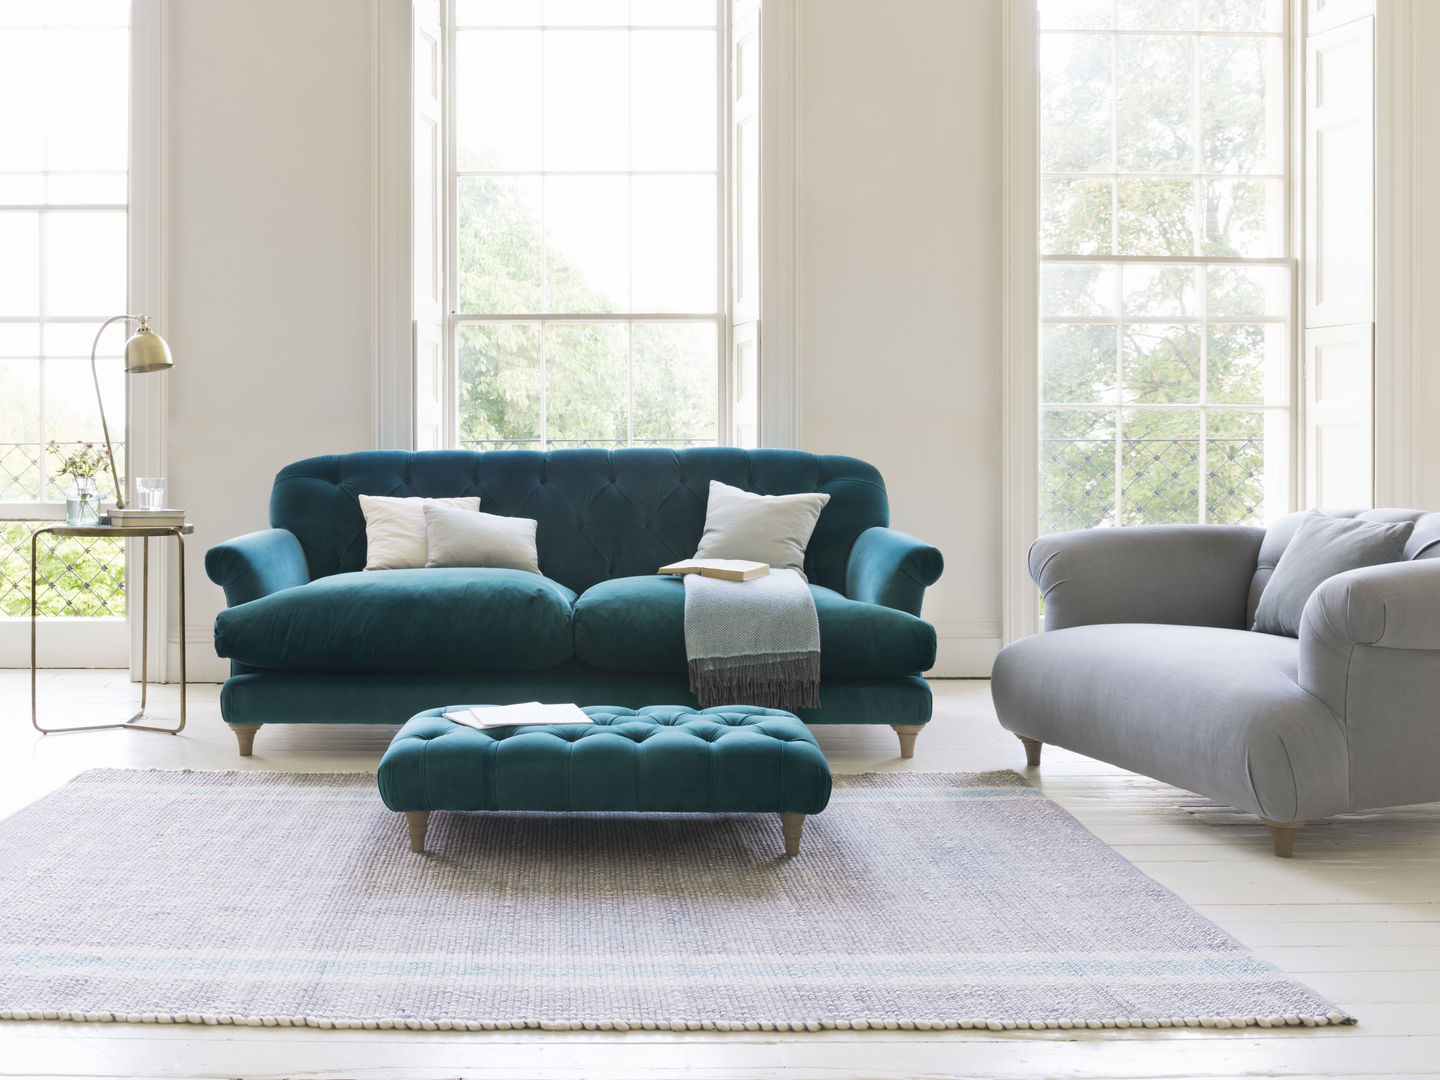 Comfty footstool Loaf Salas de estar modernas footstool,teal,living room,sofa,space,windows,blue,velvet,green